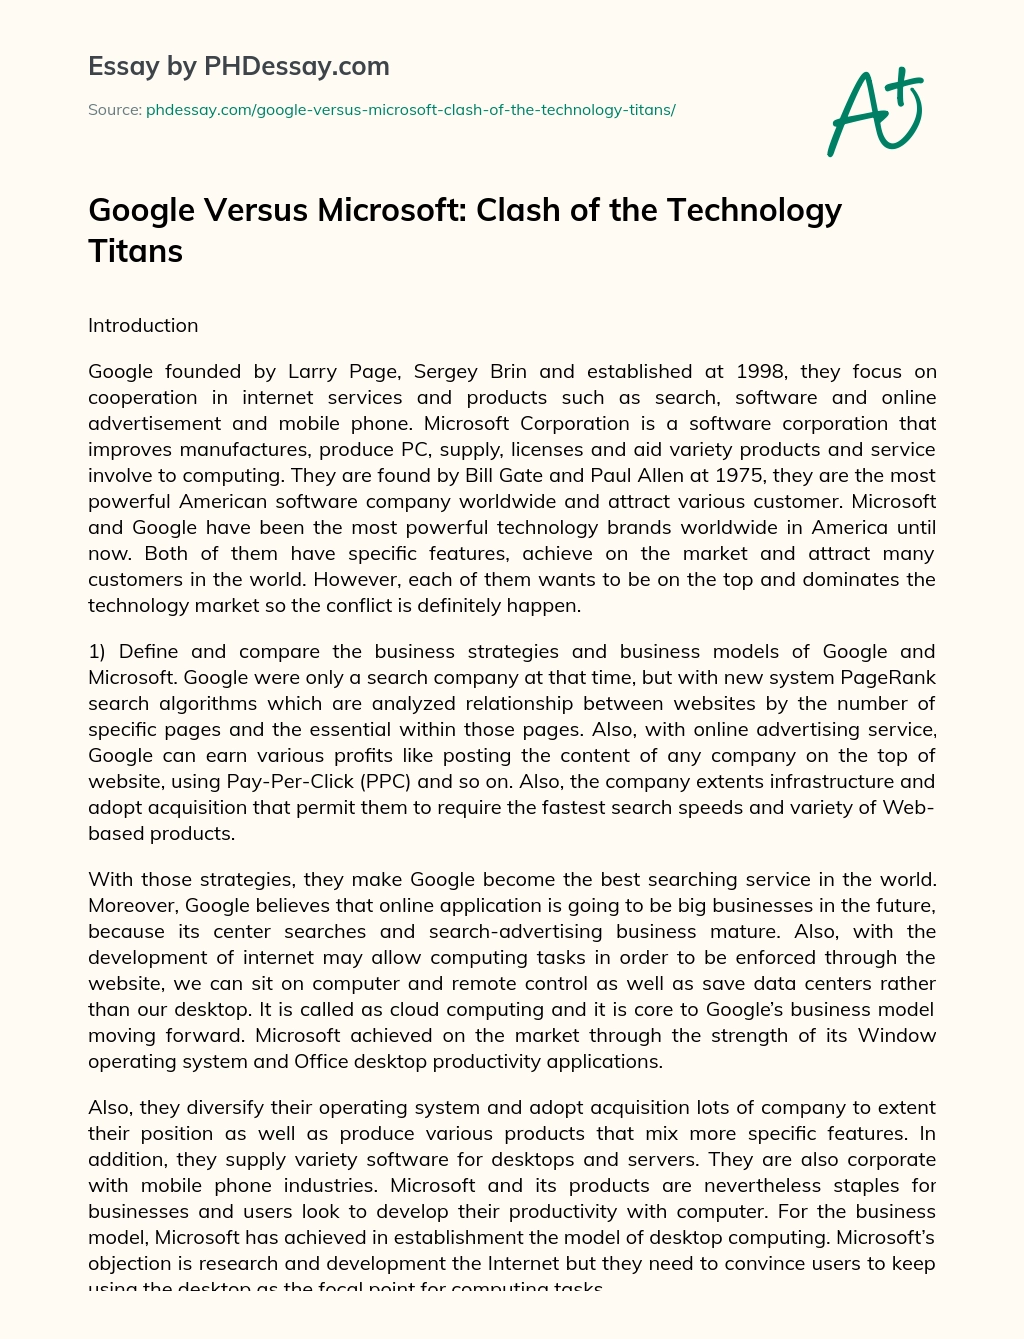 Google Versus Microsoft: Clash of the Technology Titans essay